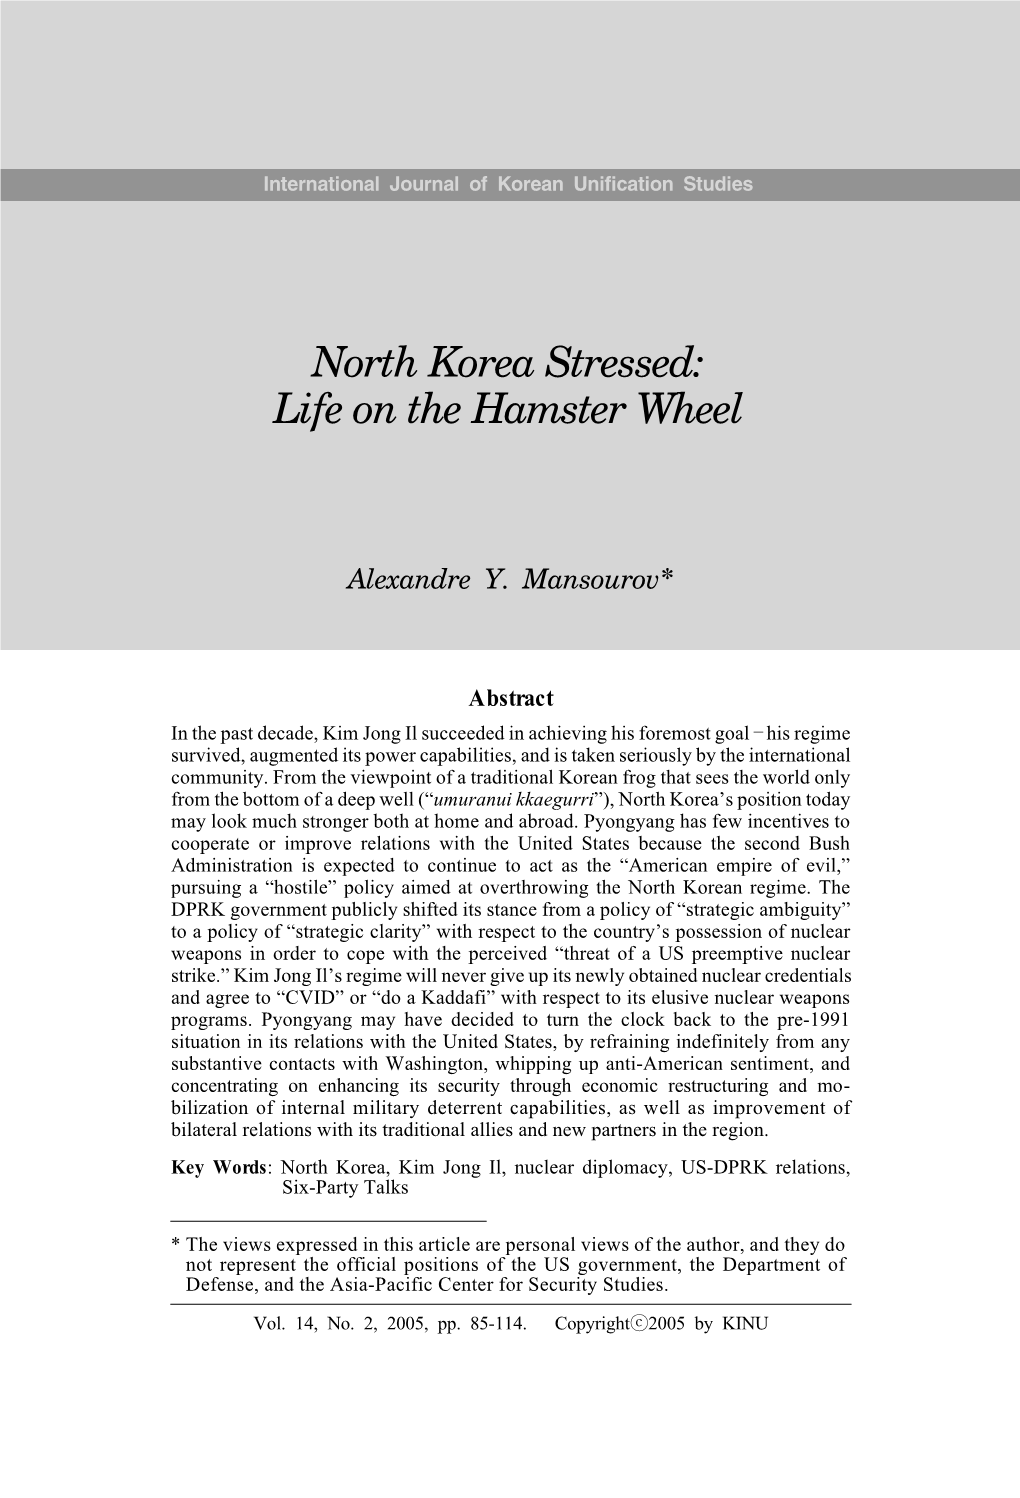 North Korea Stressed: Life on the Hamster Wheel